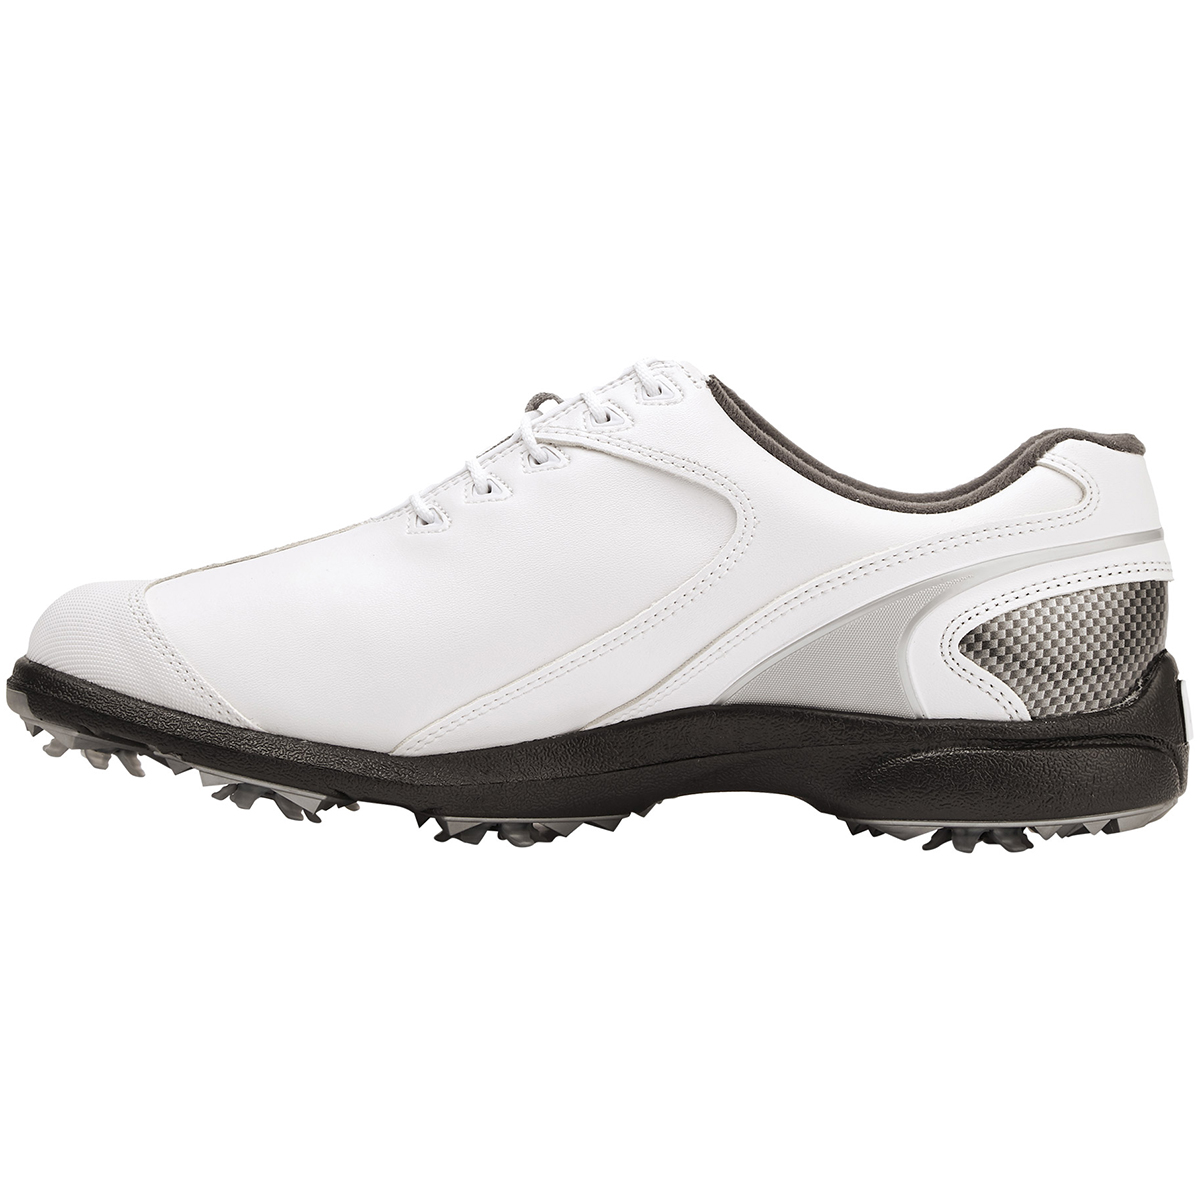 FootJoy Sport LT Shoes | Online Golf